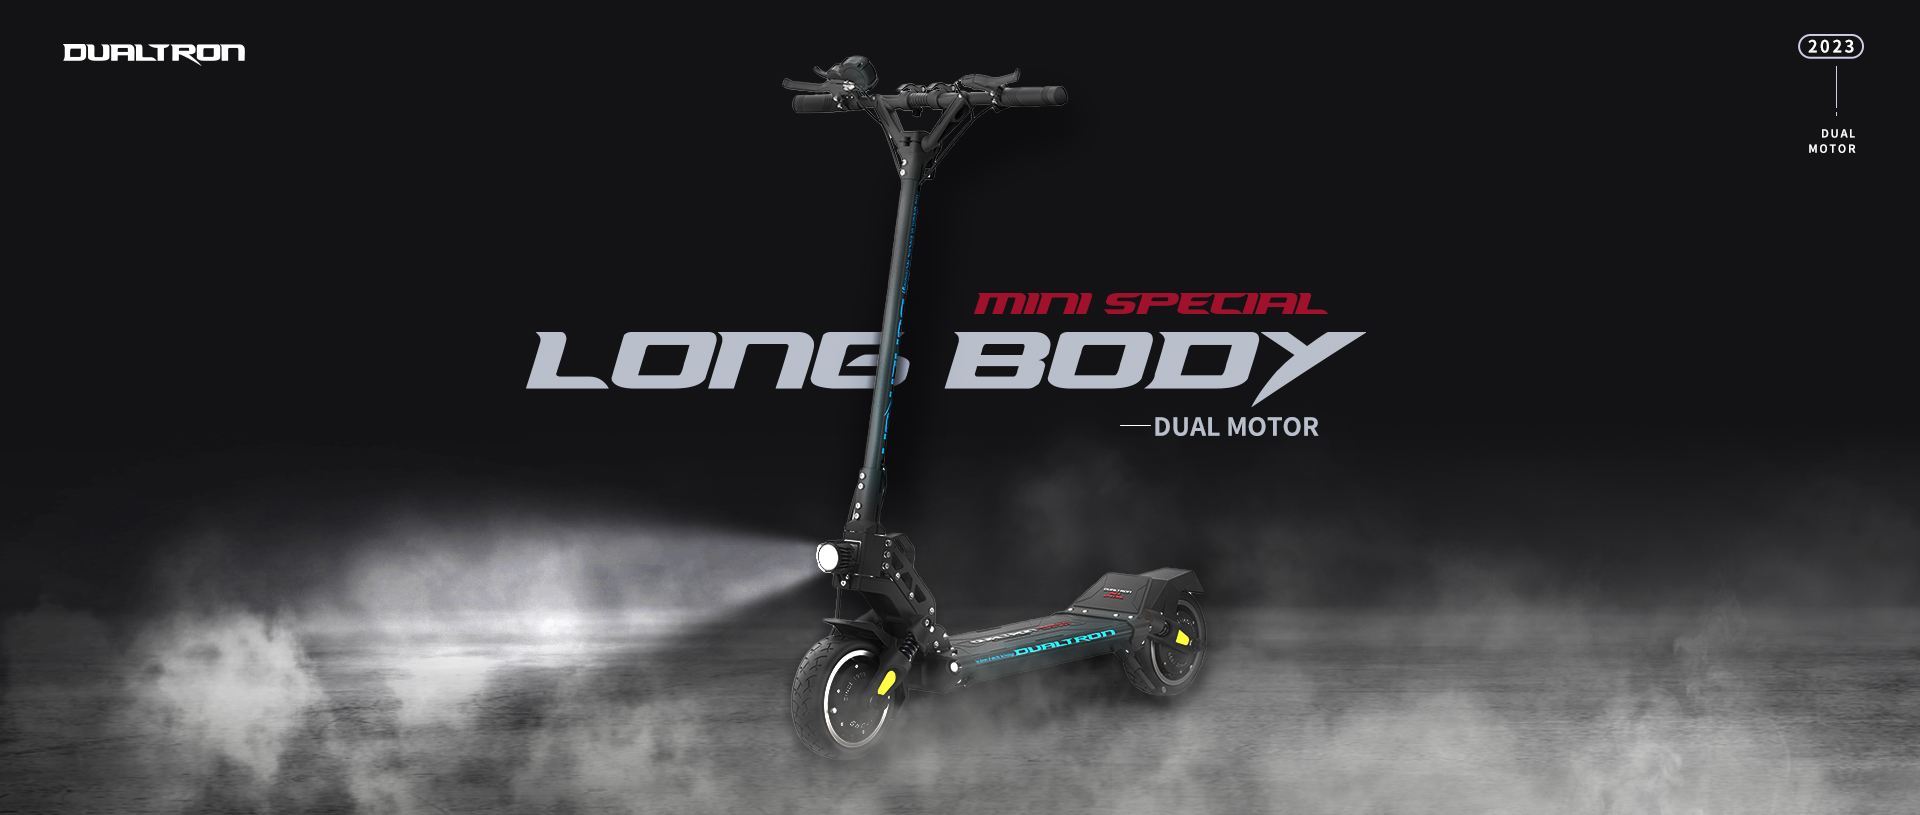 Dualtron Mini Special Long Body - MiniMotors Electric Scooters - Last Mile